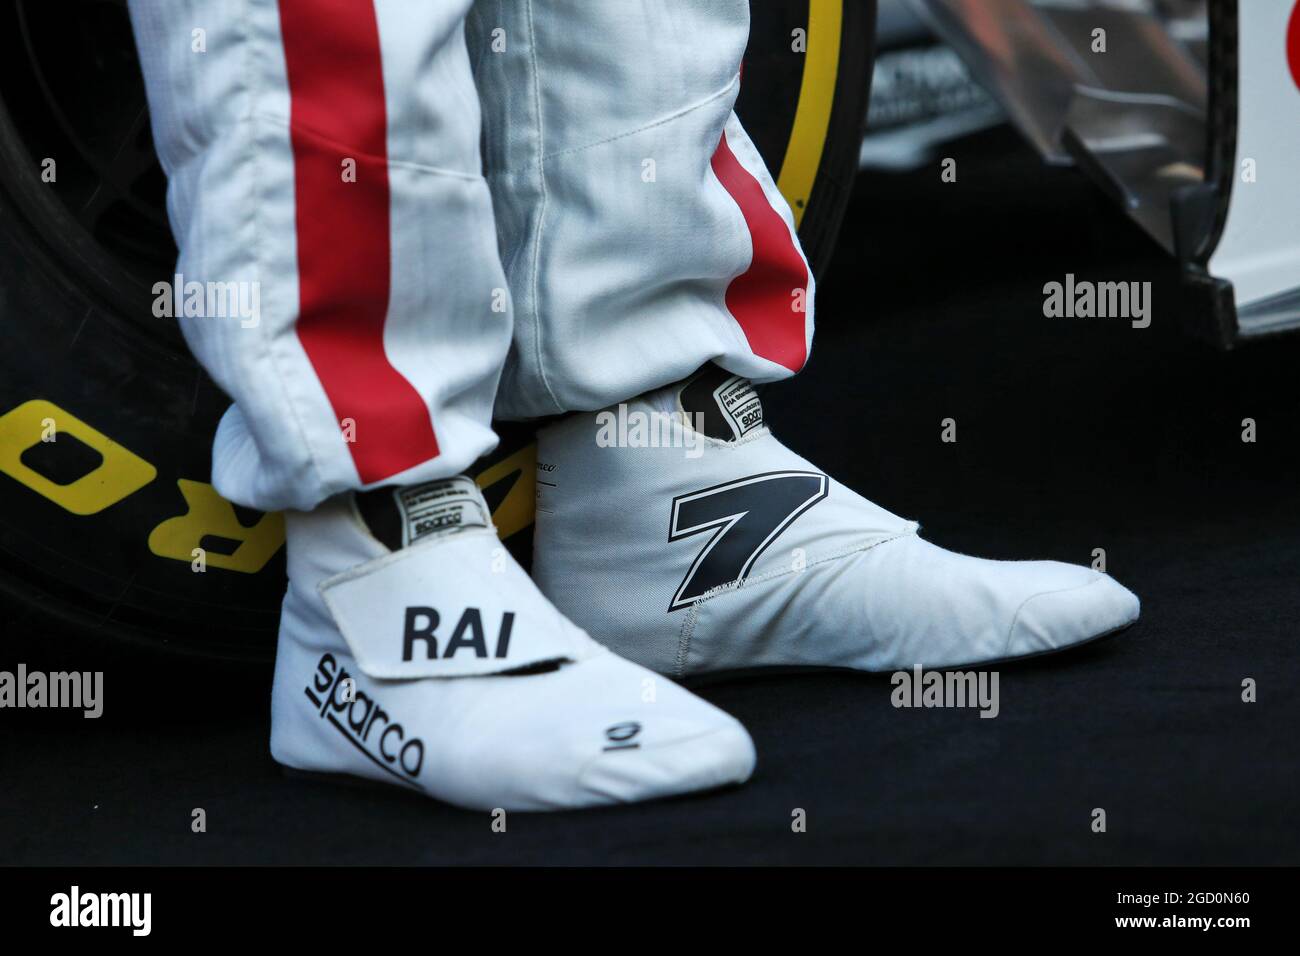 Alfa romeo racing racing boots hi-res stock photography and images - Alamy